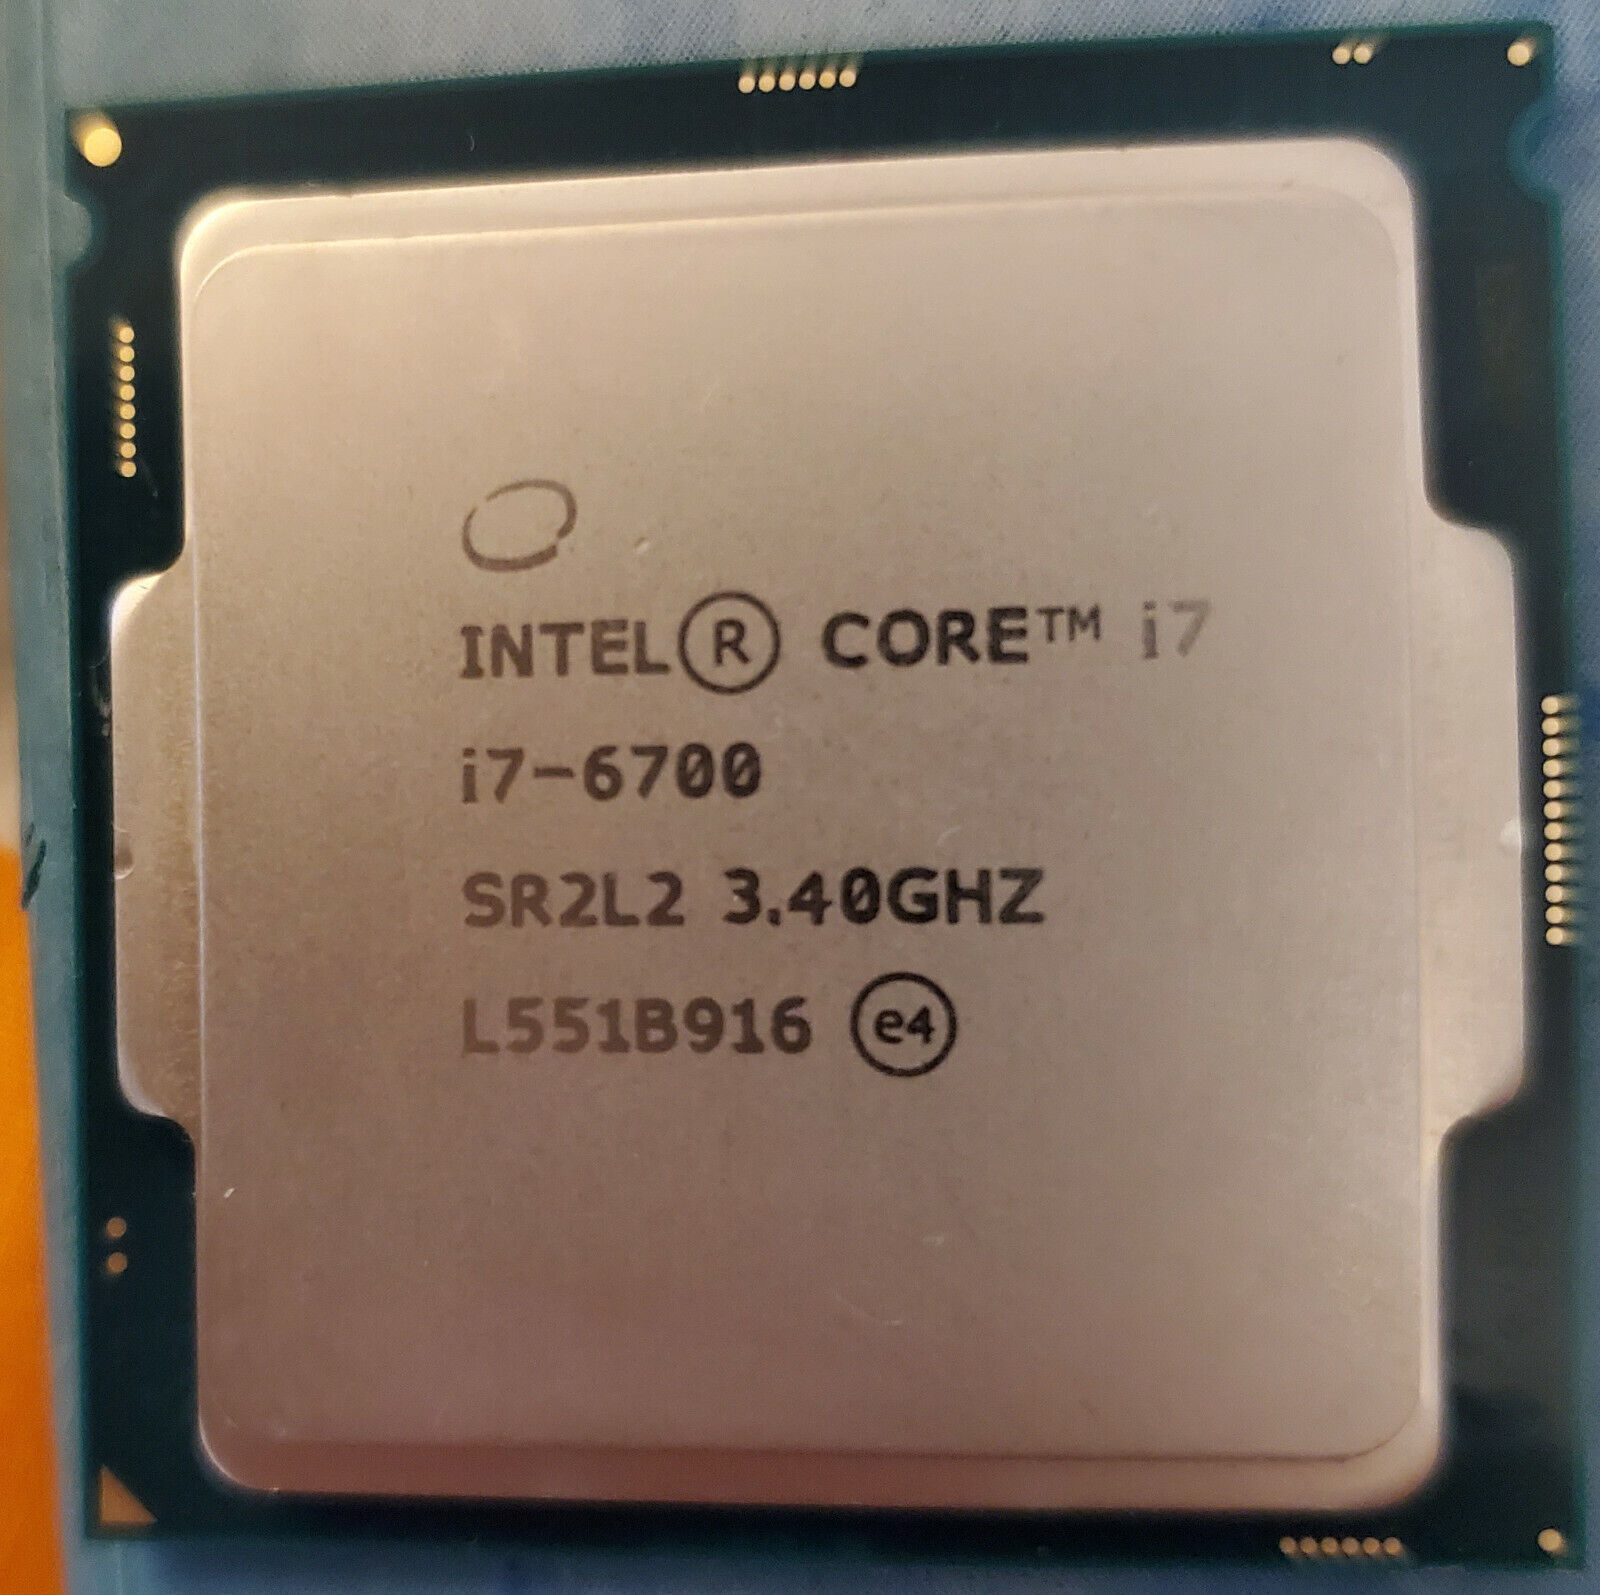 Intel Core i7-6700 3.4 GHz CPU Processor (SR2L2) for sale online 